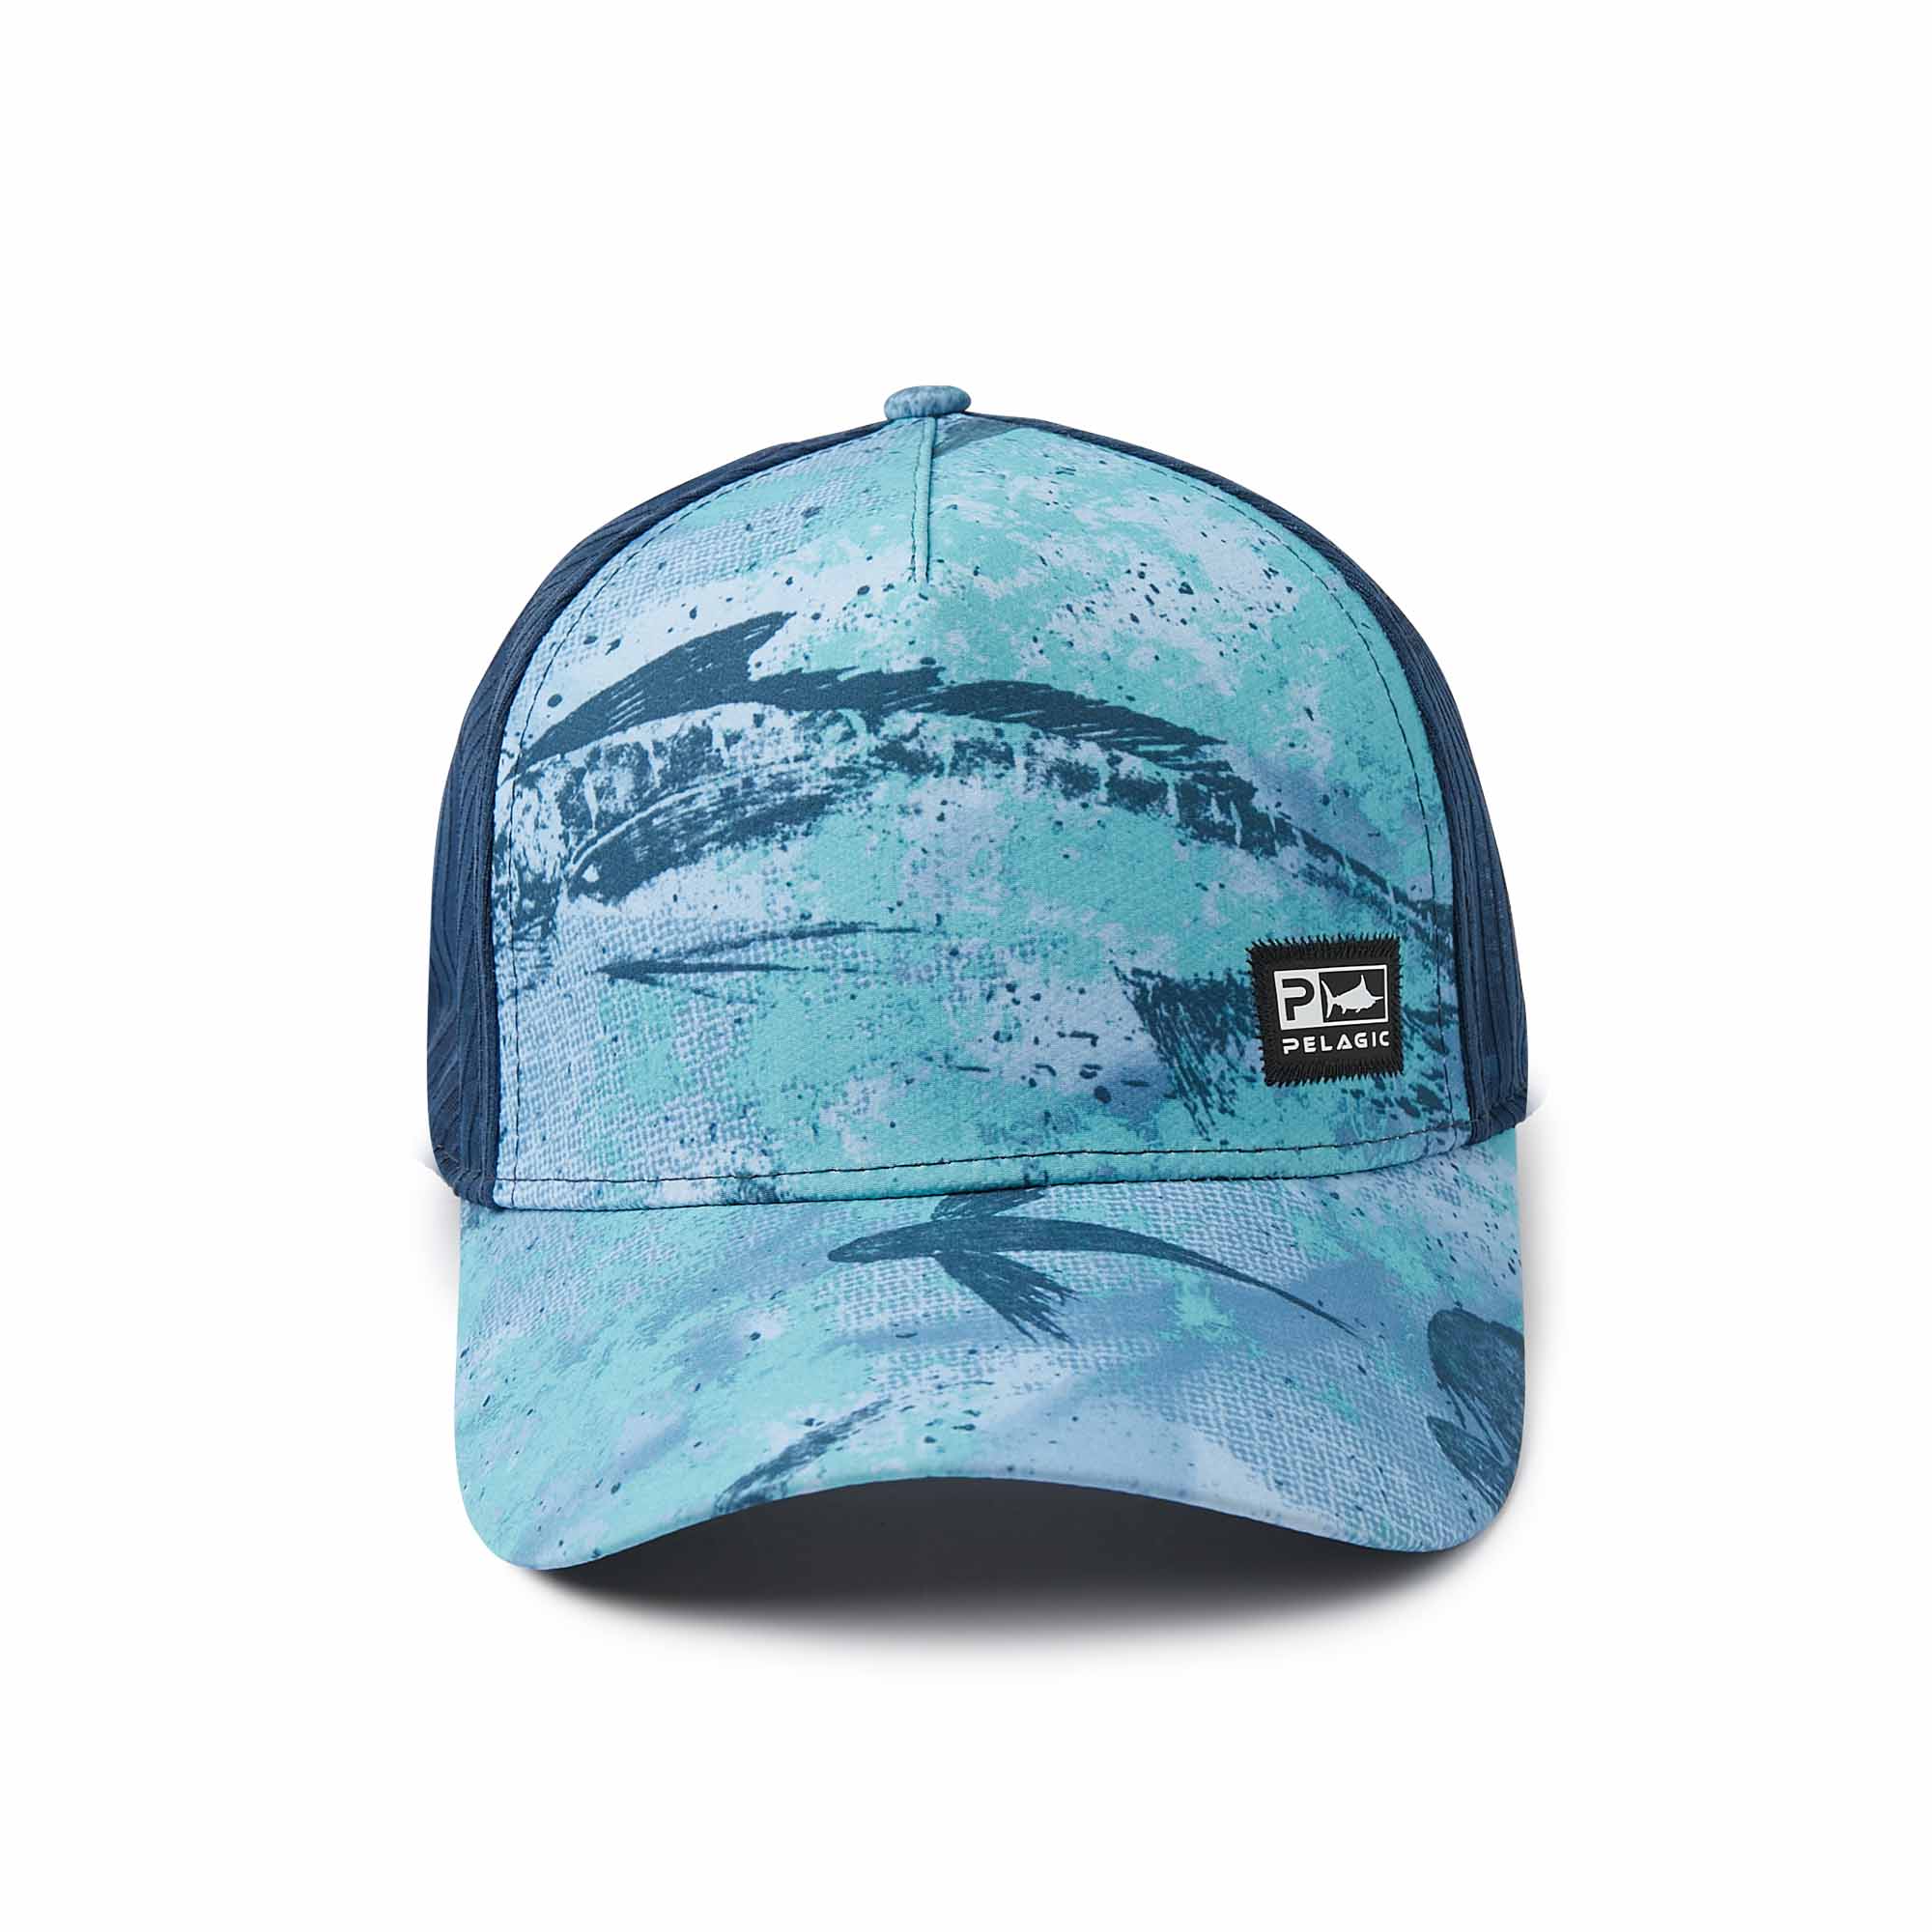 Performance Fishing Pelagic Trucker Hat Merchandise Men Baseball